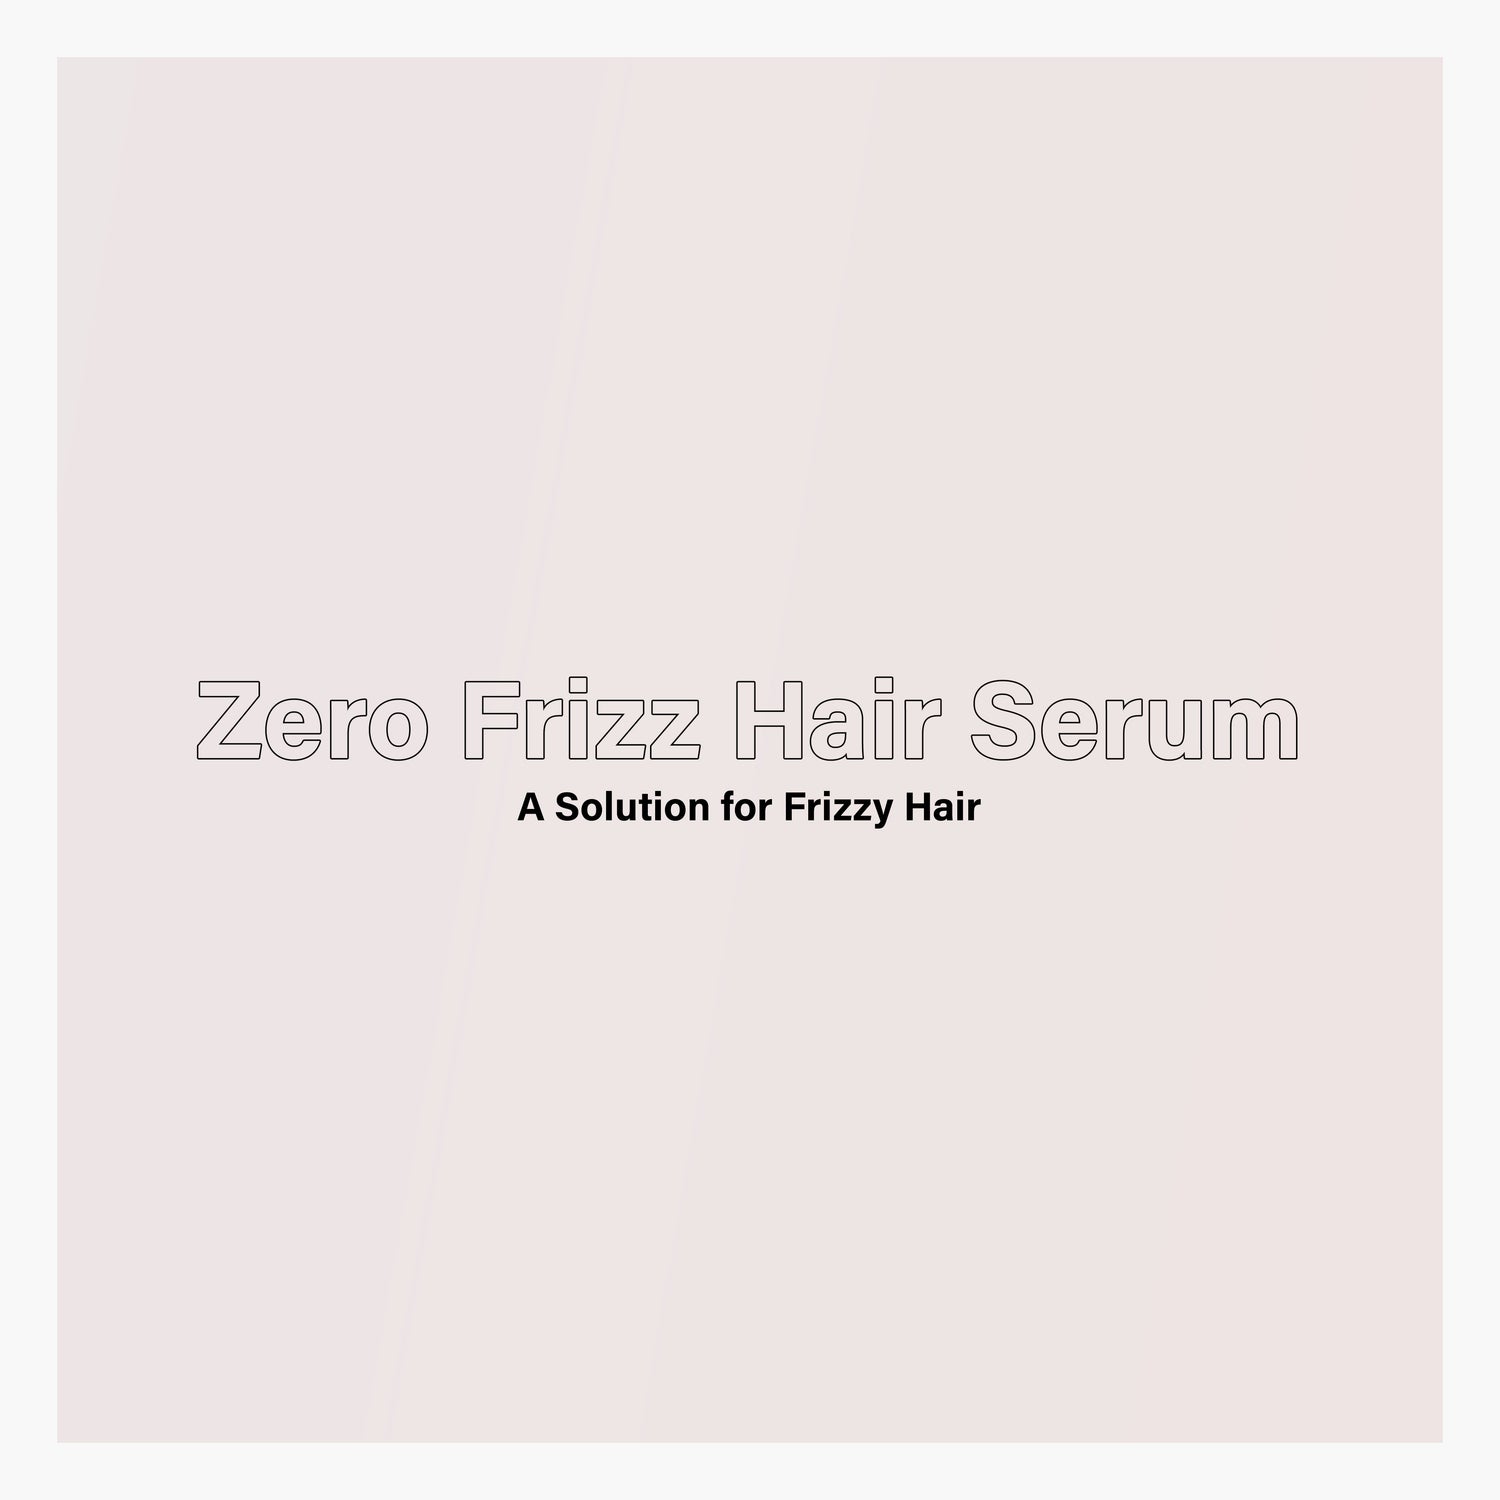 Zero Frizz Hair Serum: A Solution for Frizzy Hair